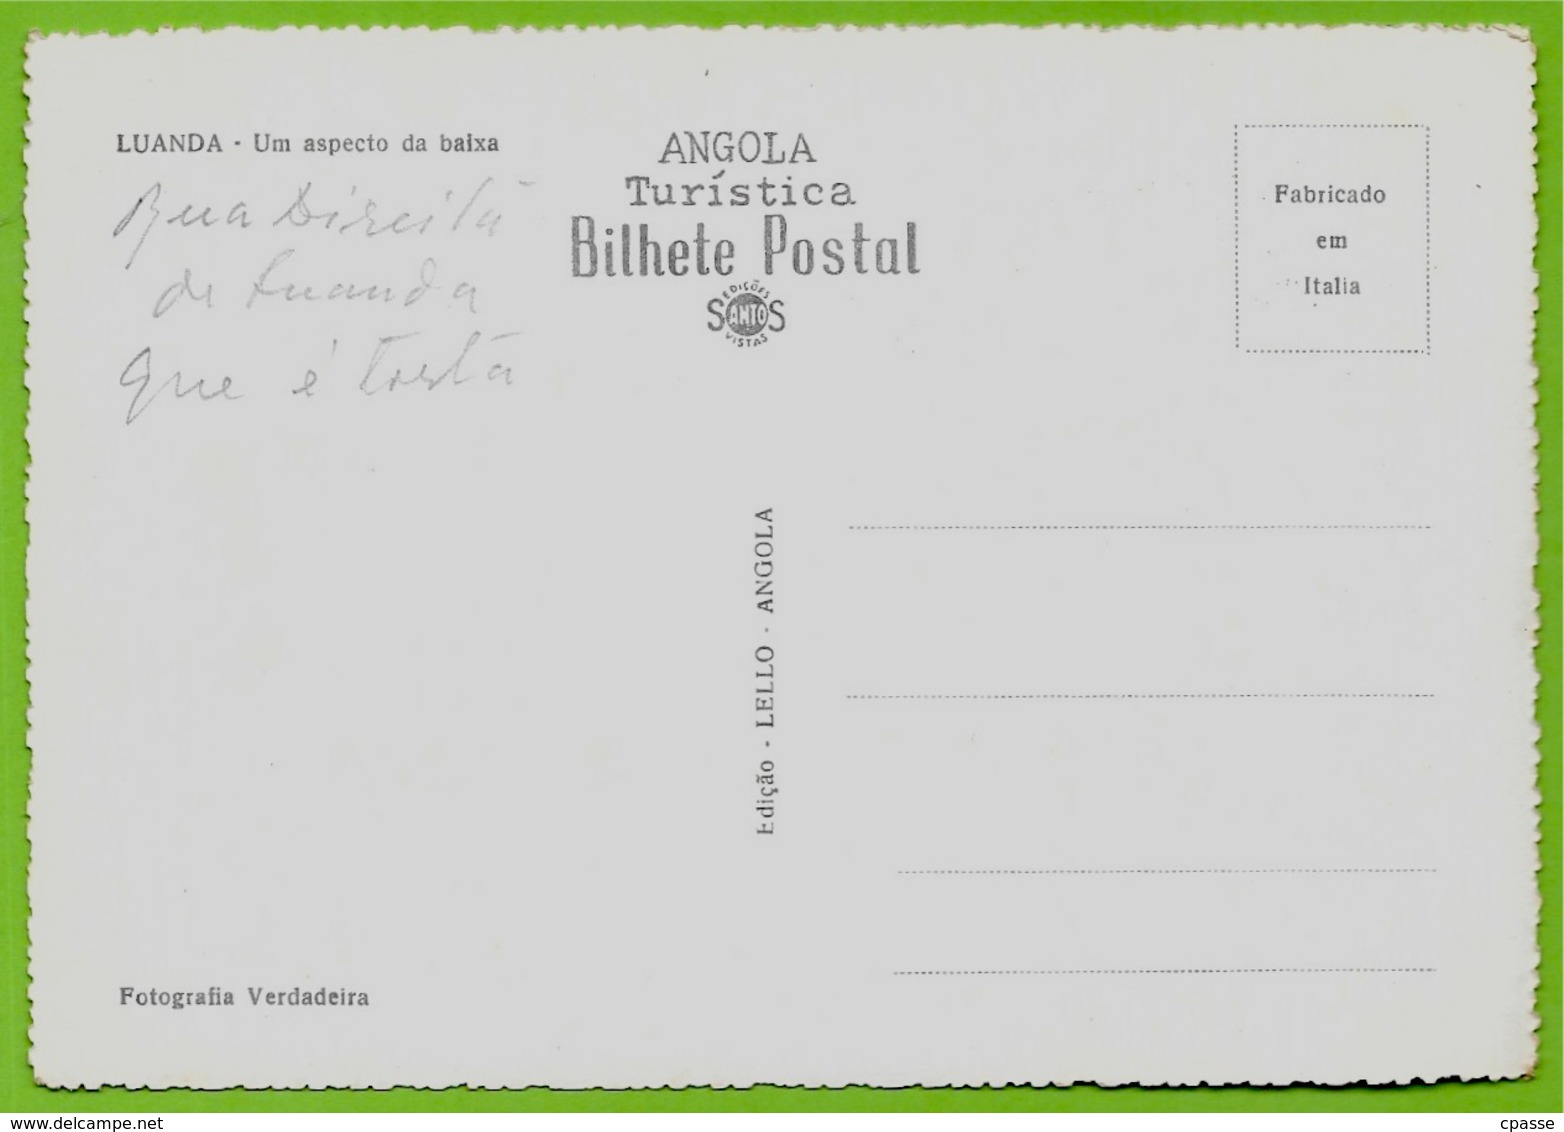 CPSM Post Card Africa Angola LUANDA - Um Aspecto Da Baixa ° Ediçao Lello - Angola